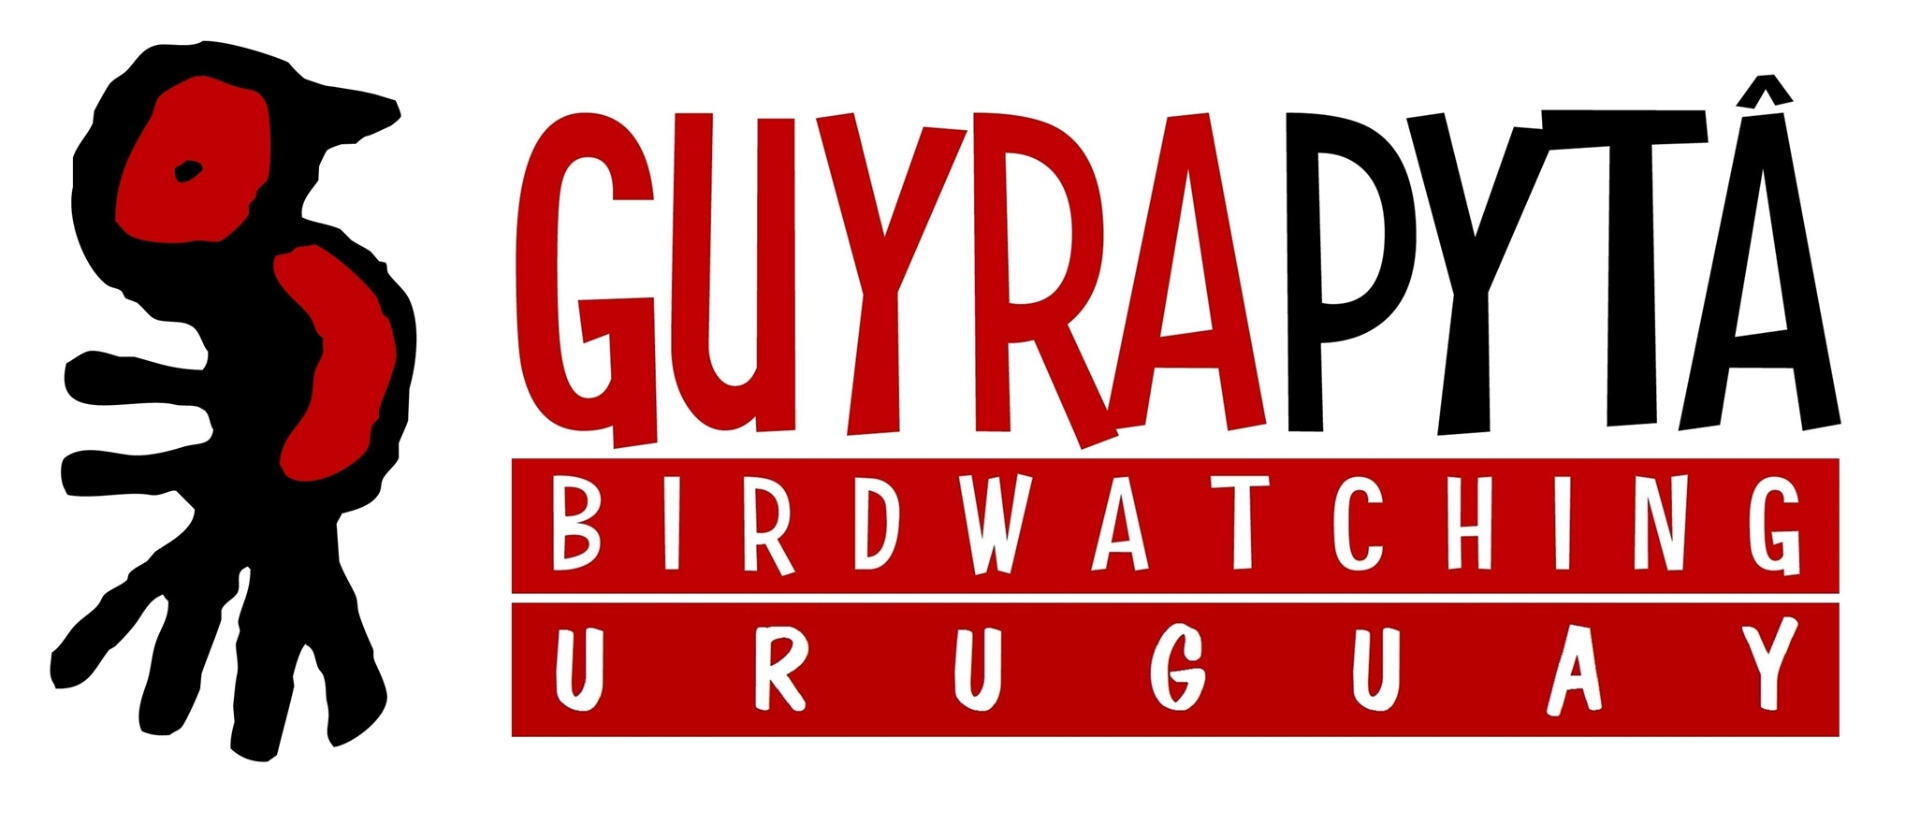 Birdwatching Tours in Uruguay